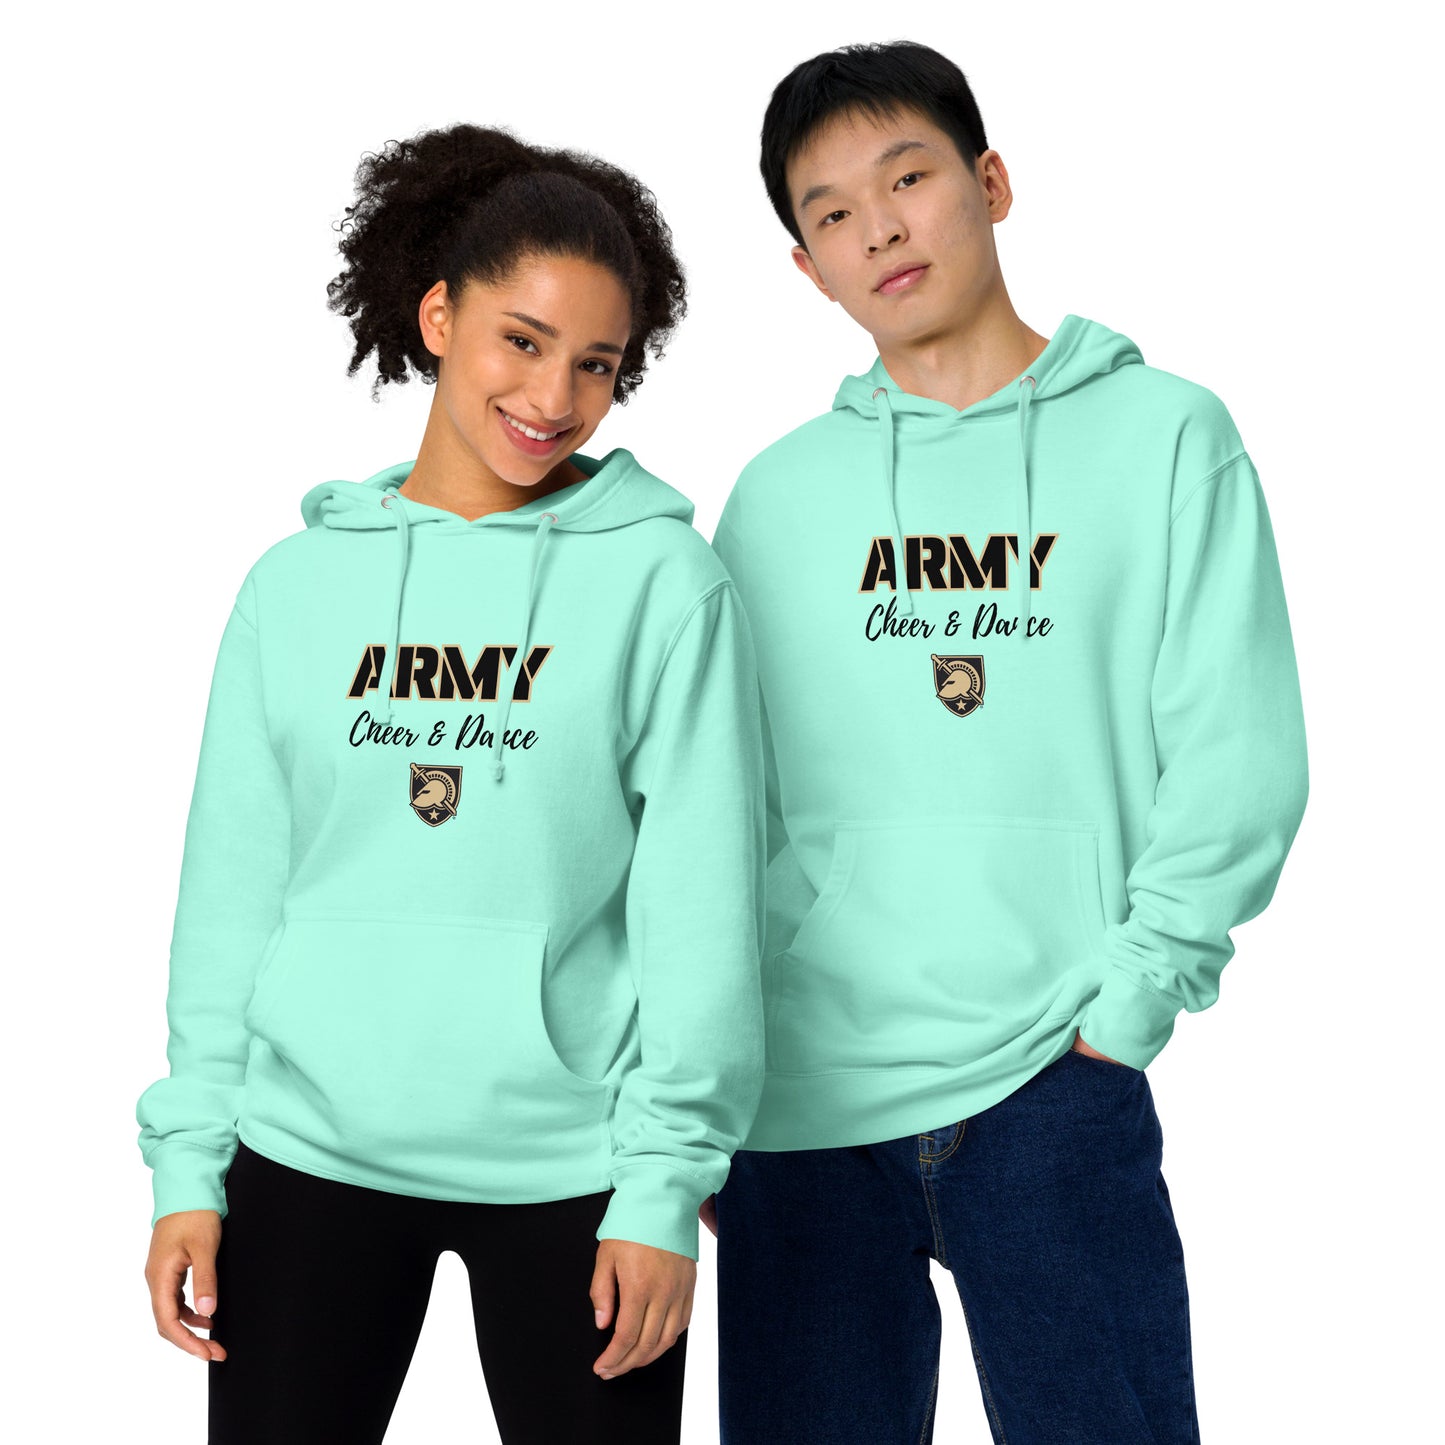 Army Cheer & Dance Unisex midweight hoodie